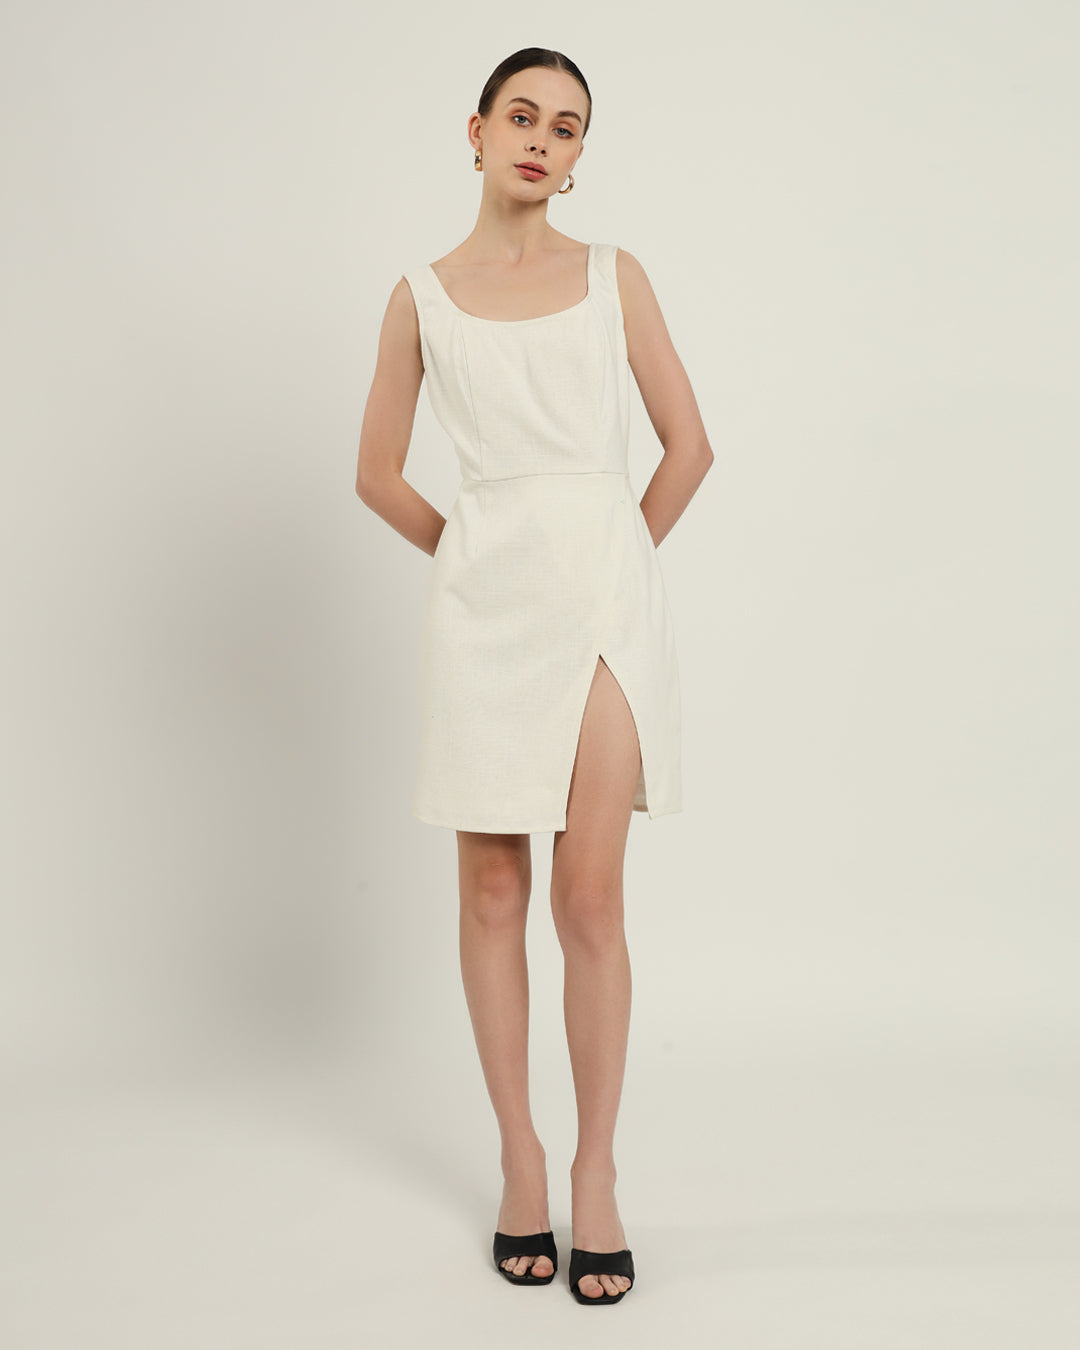 The Cannes Daisy White Linen Dress